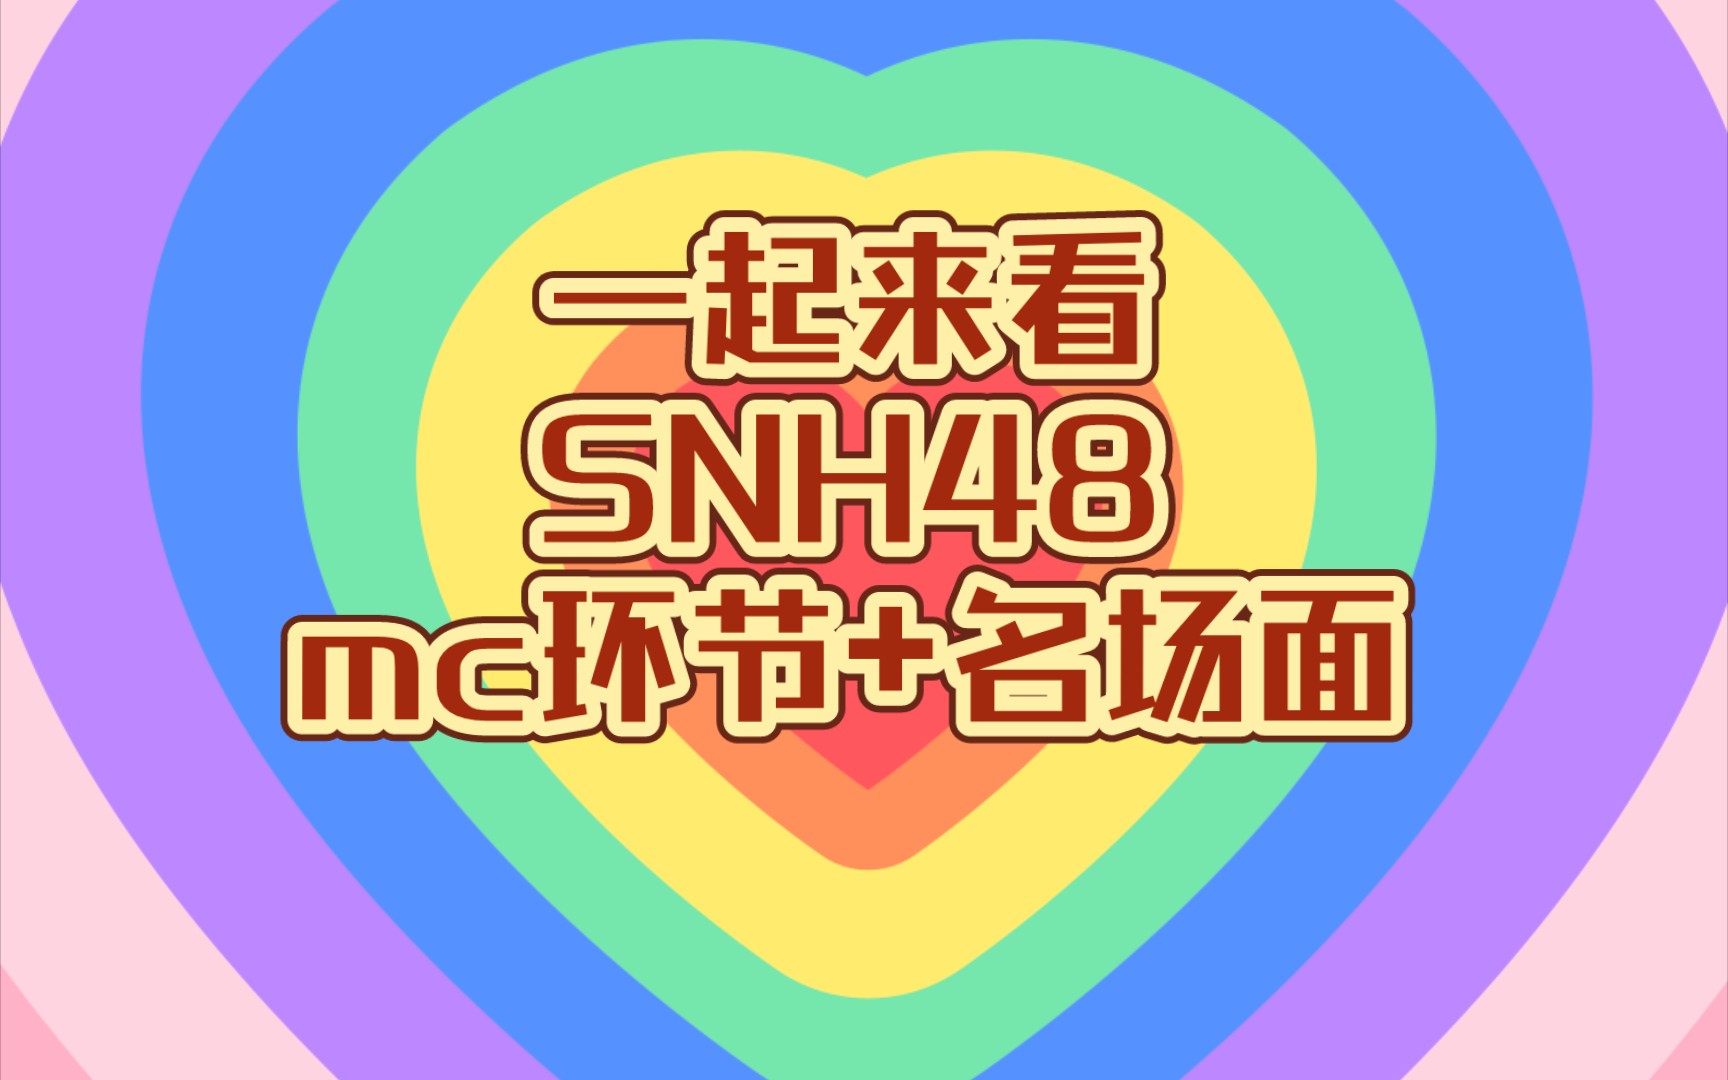 snh48标志图片